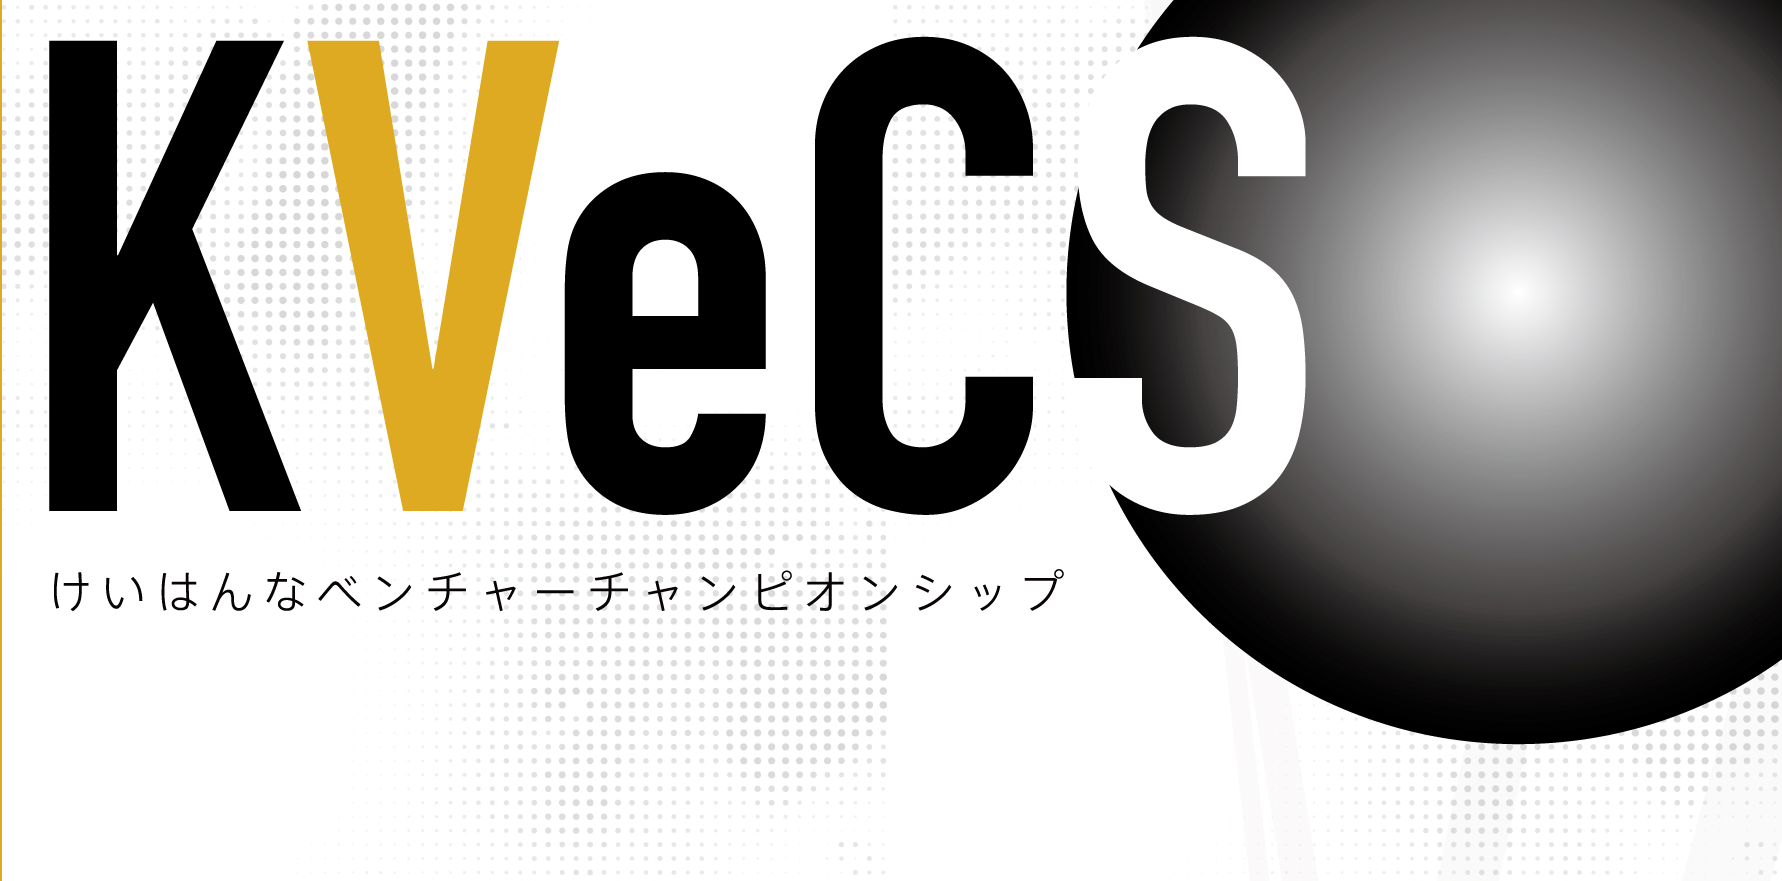 Keihanna Venture Championship (KVeCS)～Make Next Innovation! Go Global!～